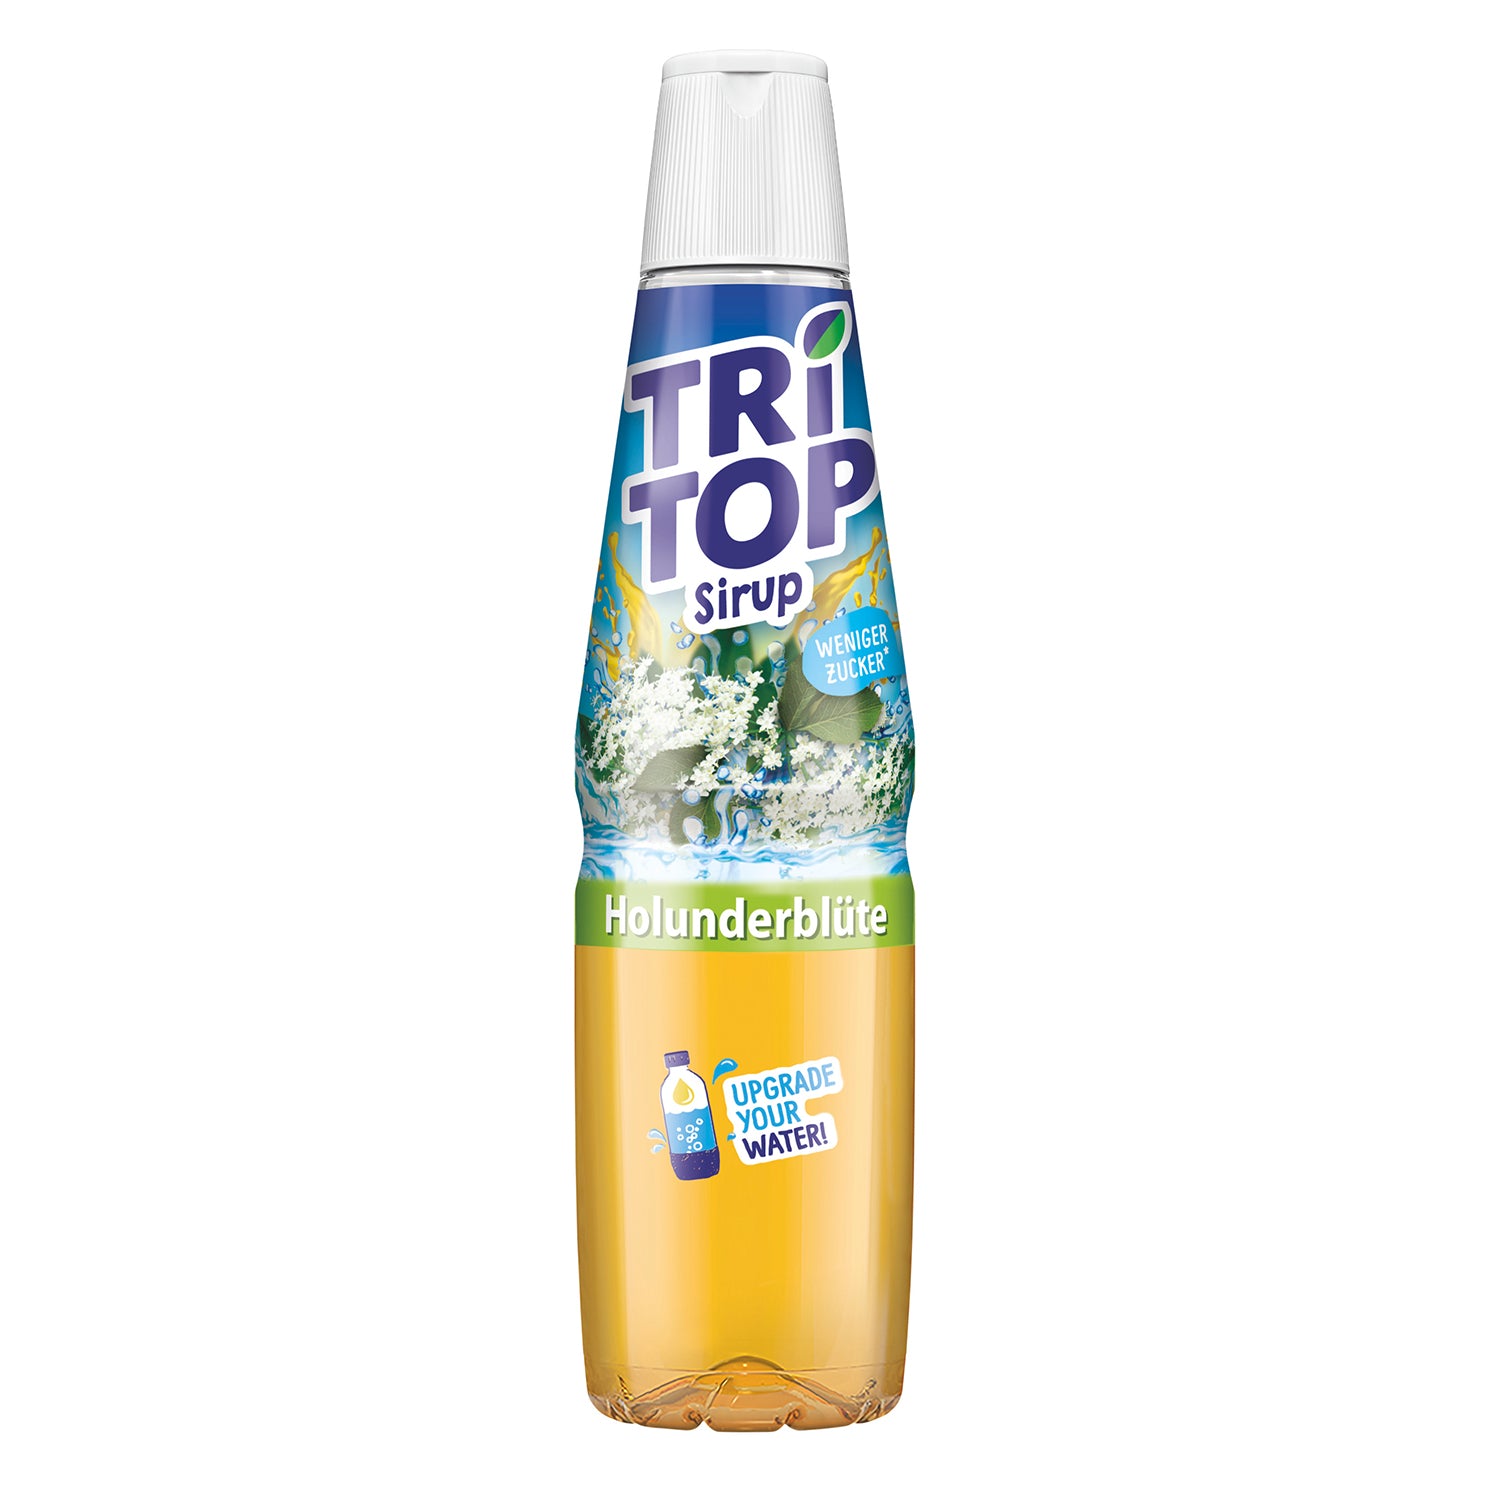 TRi TOP Sirup Holunderblüte - 600 ml